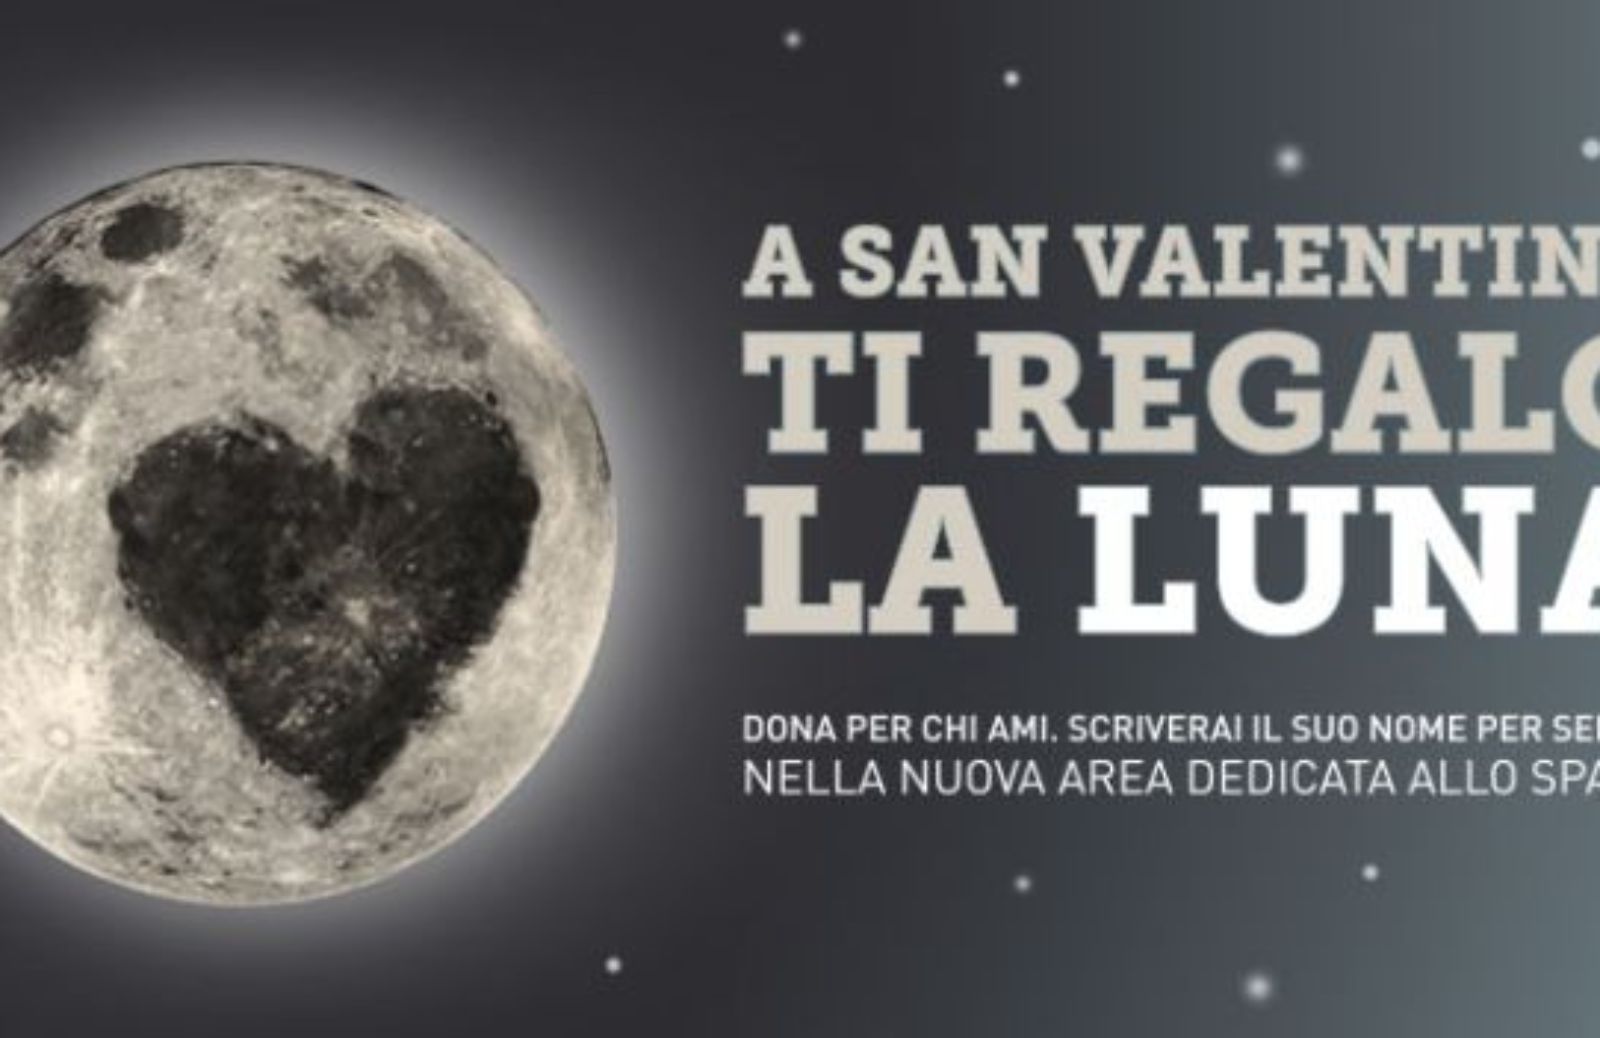 Un'idea per San Valentino: regala la luna